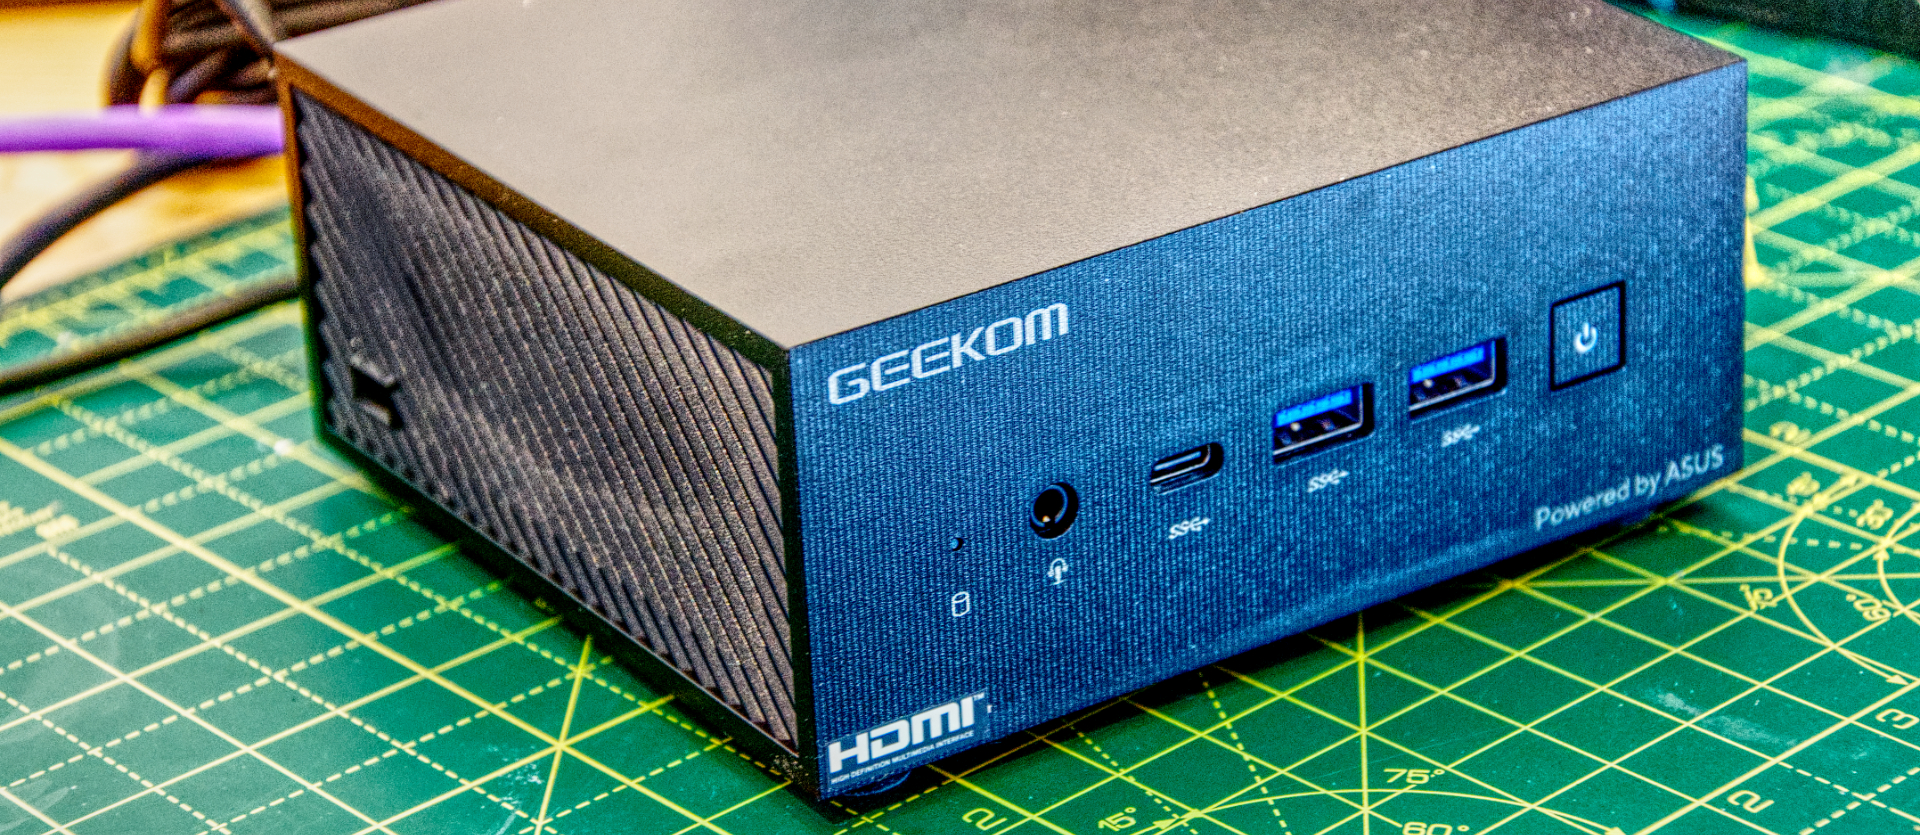 Geekom A5 Mini PC review